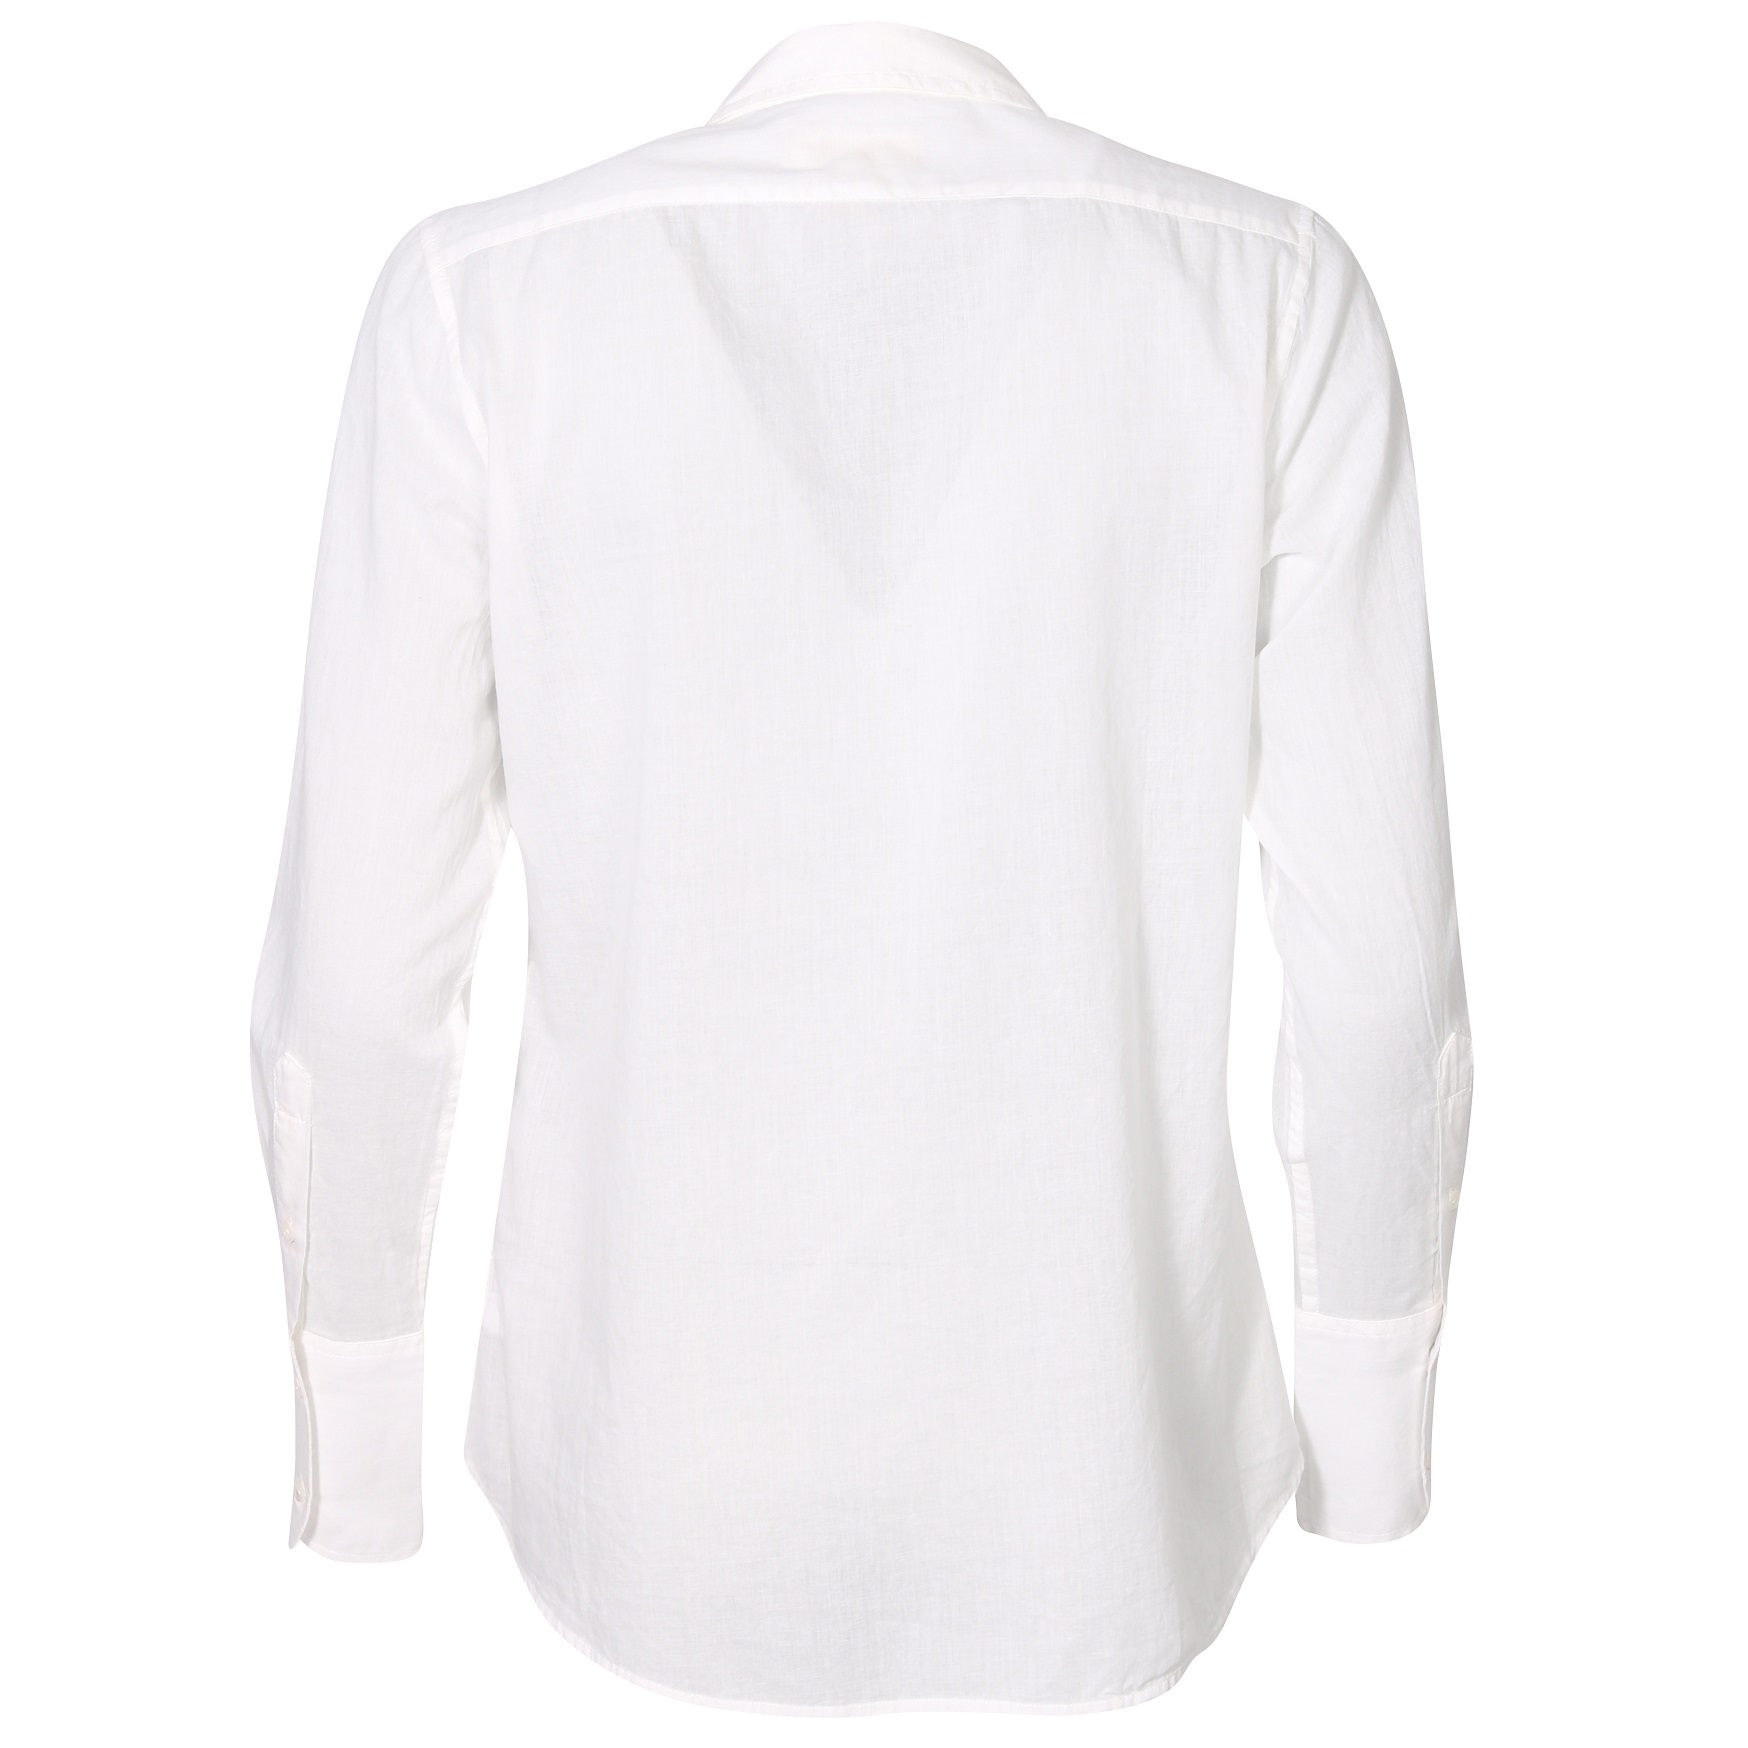 NILI LOTAN Cotton Voile NL Shirt in Ivory S